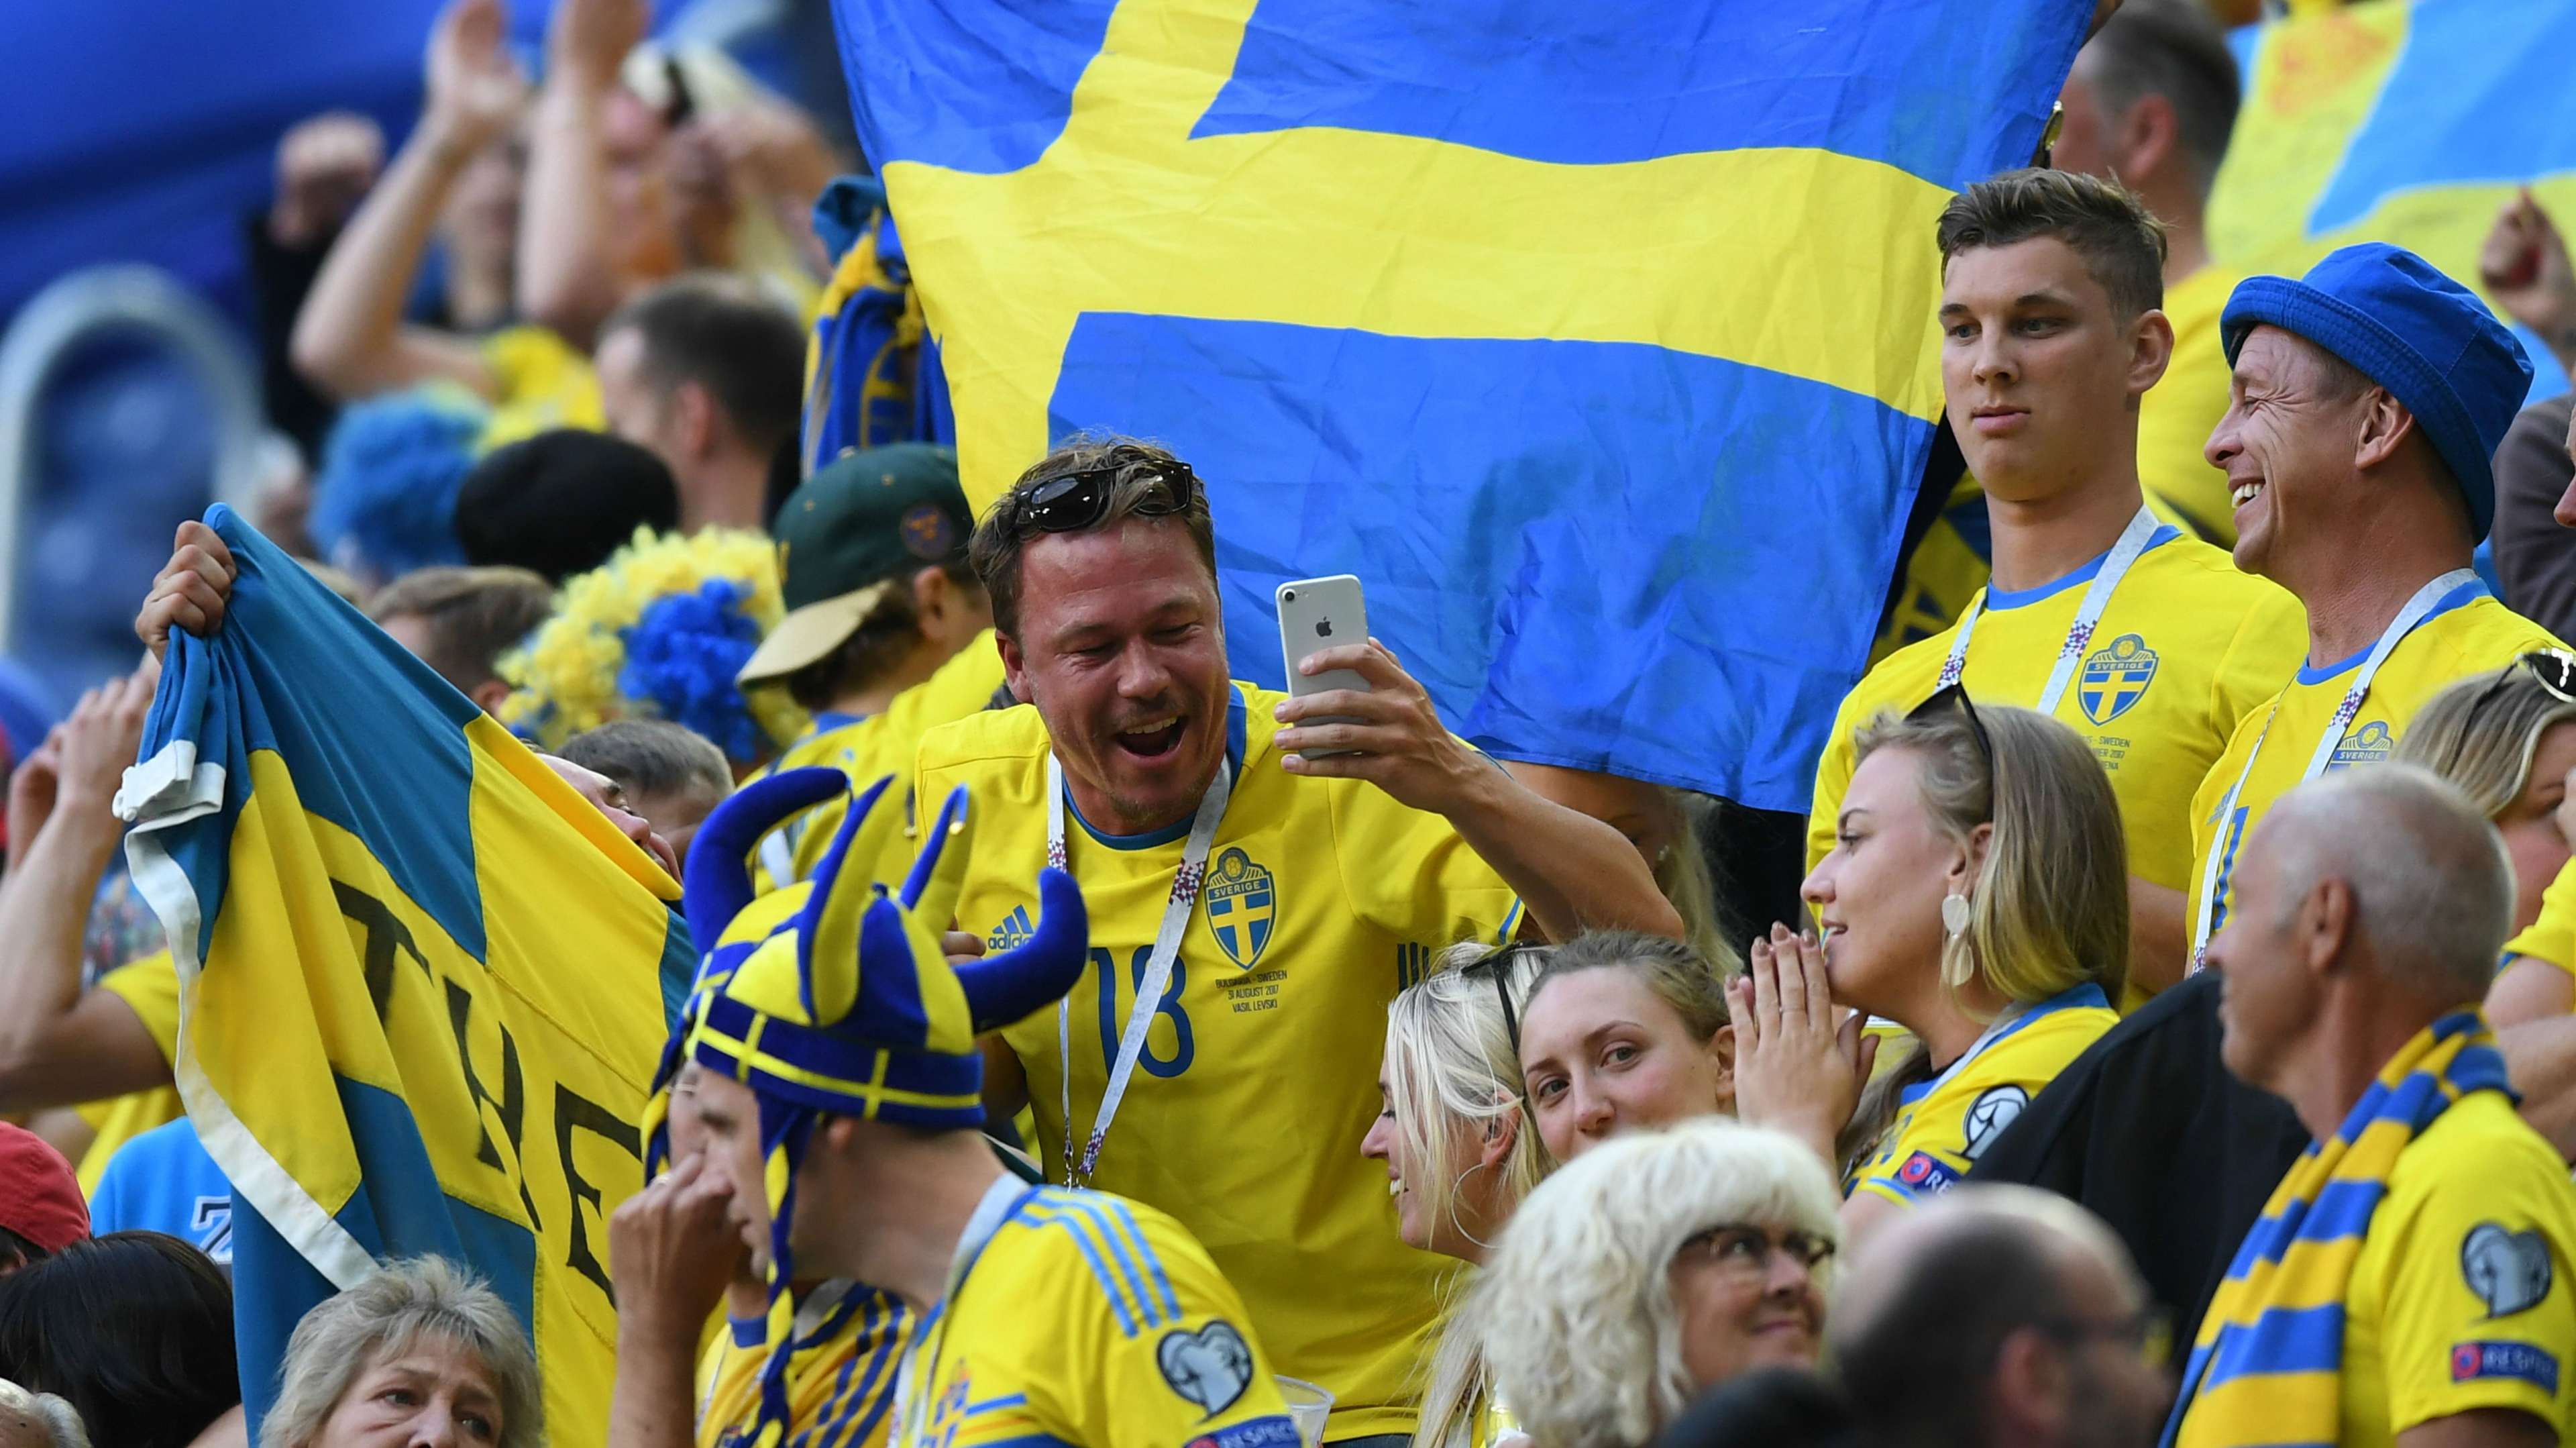 Torcida Suécia - Sweden Fans - Copa do Mundo/World Cup - 04/07/2018